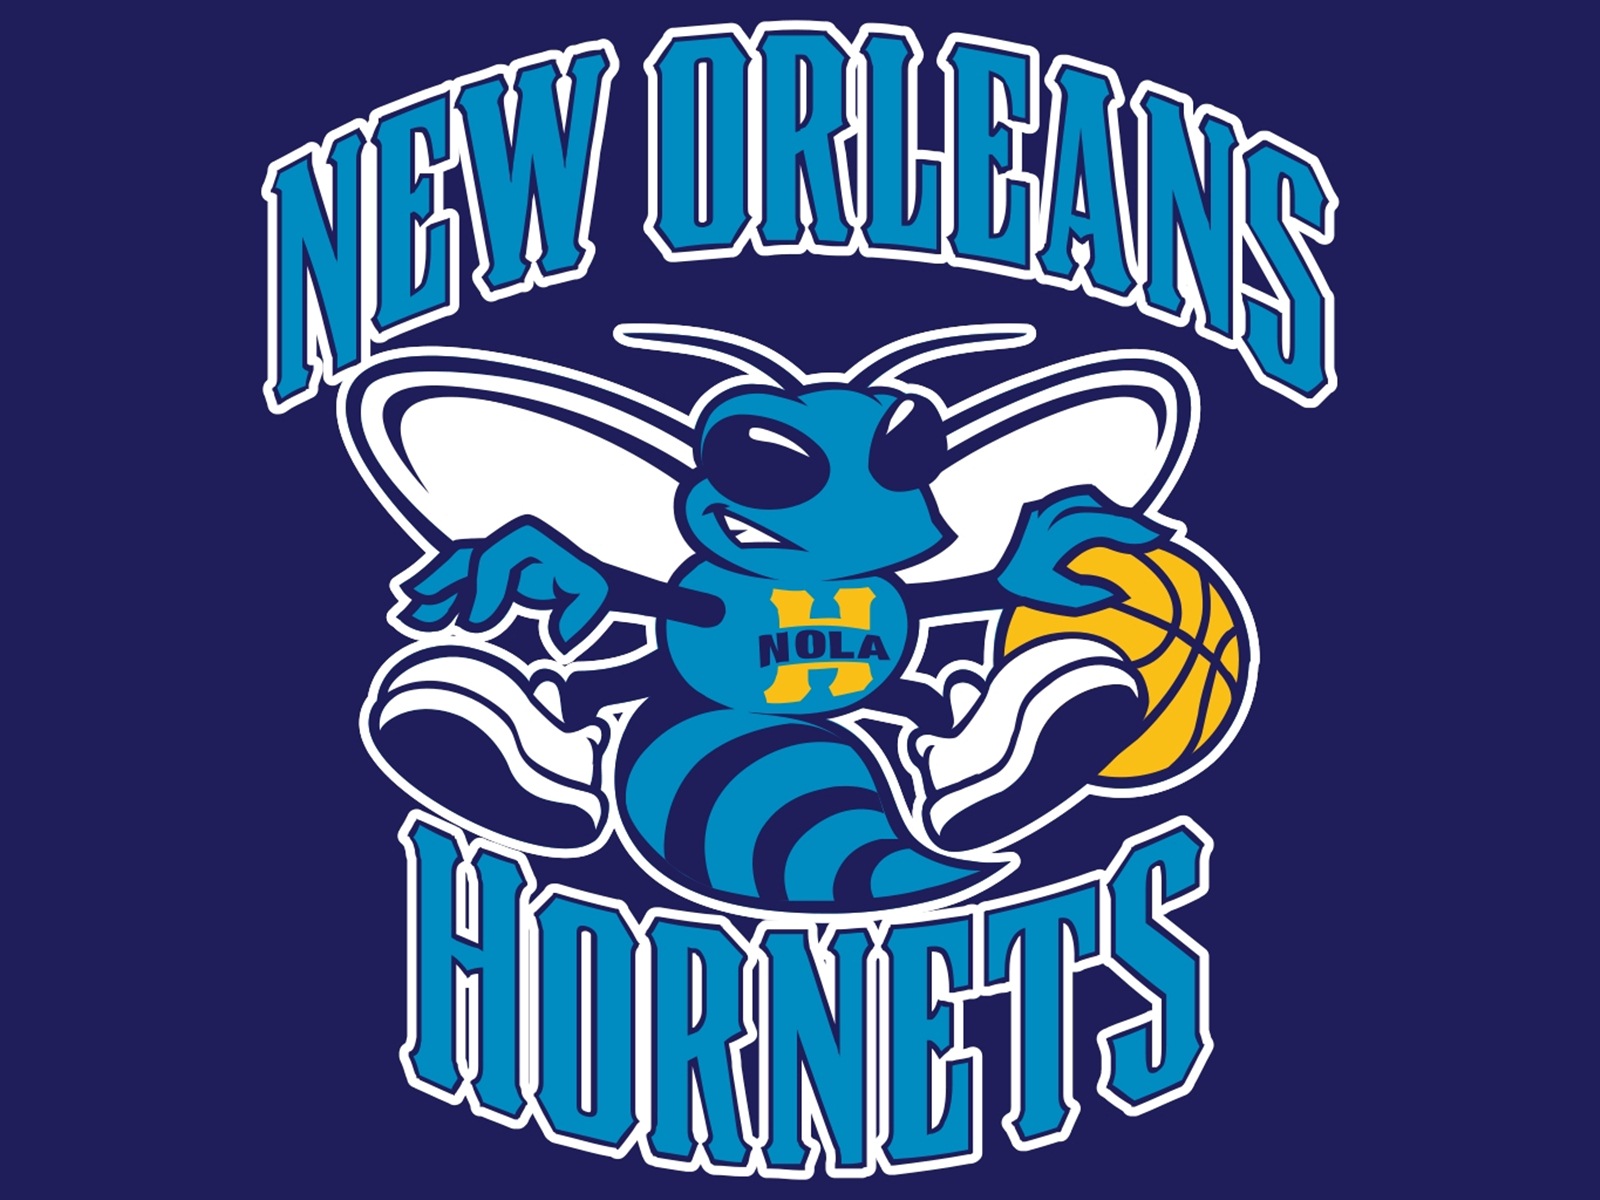 New Orleans Hors Pelicans Nba Basketball Wallpaper Background